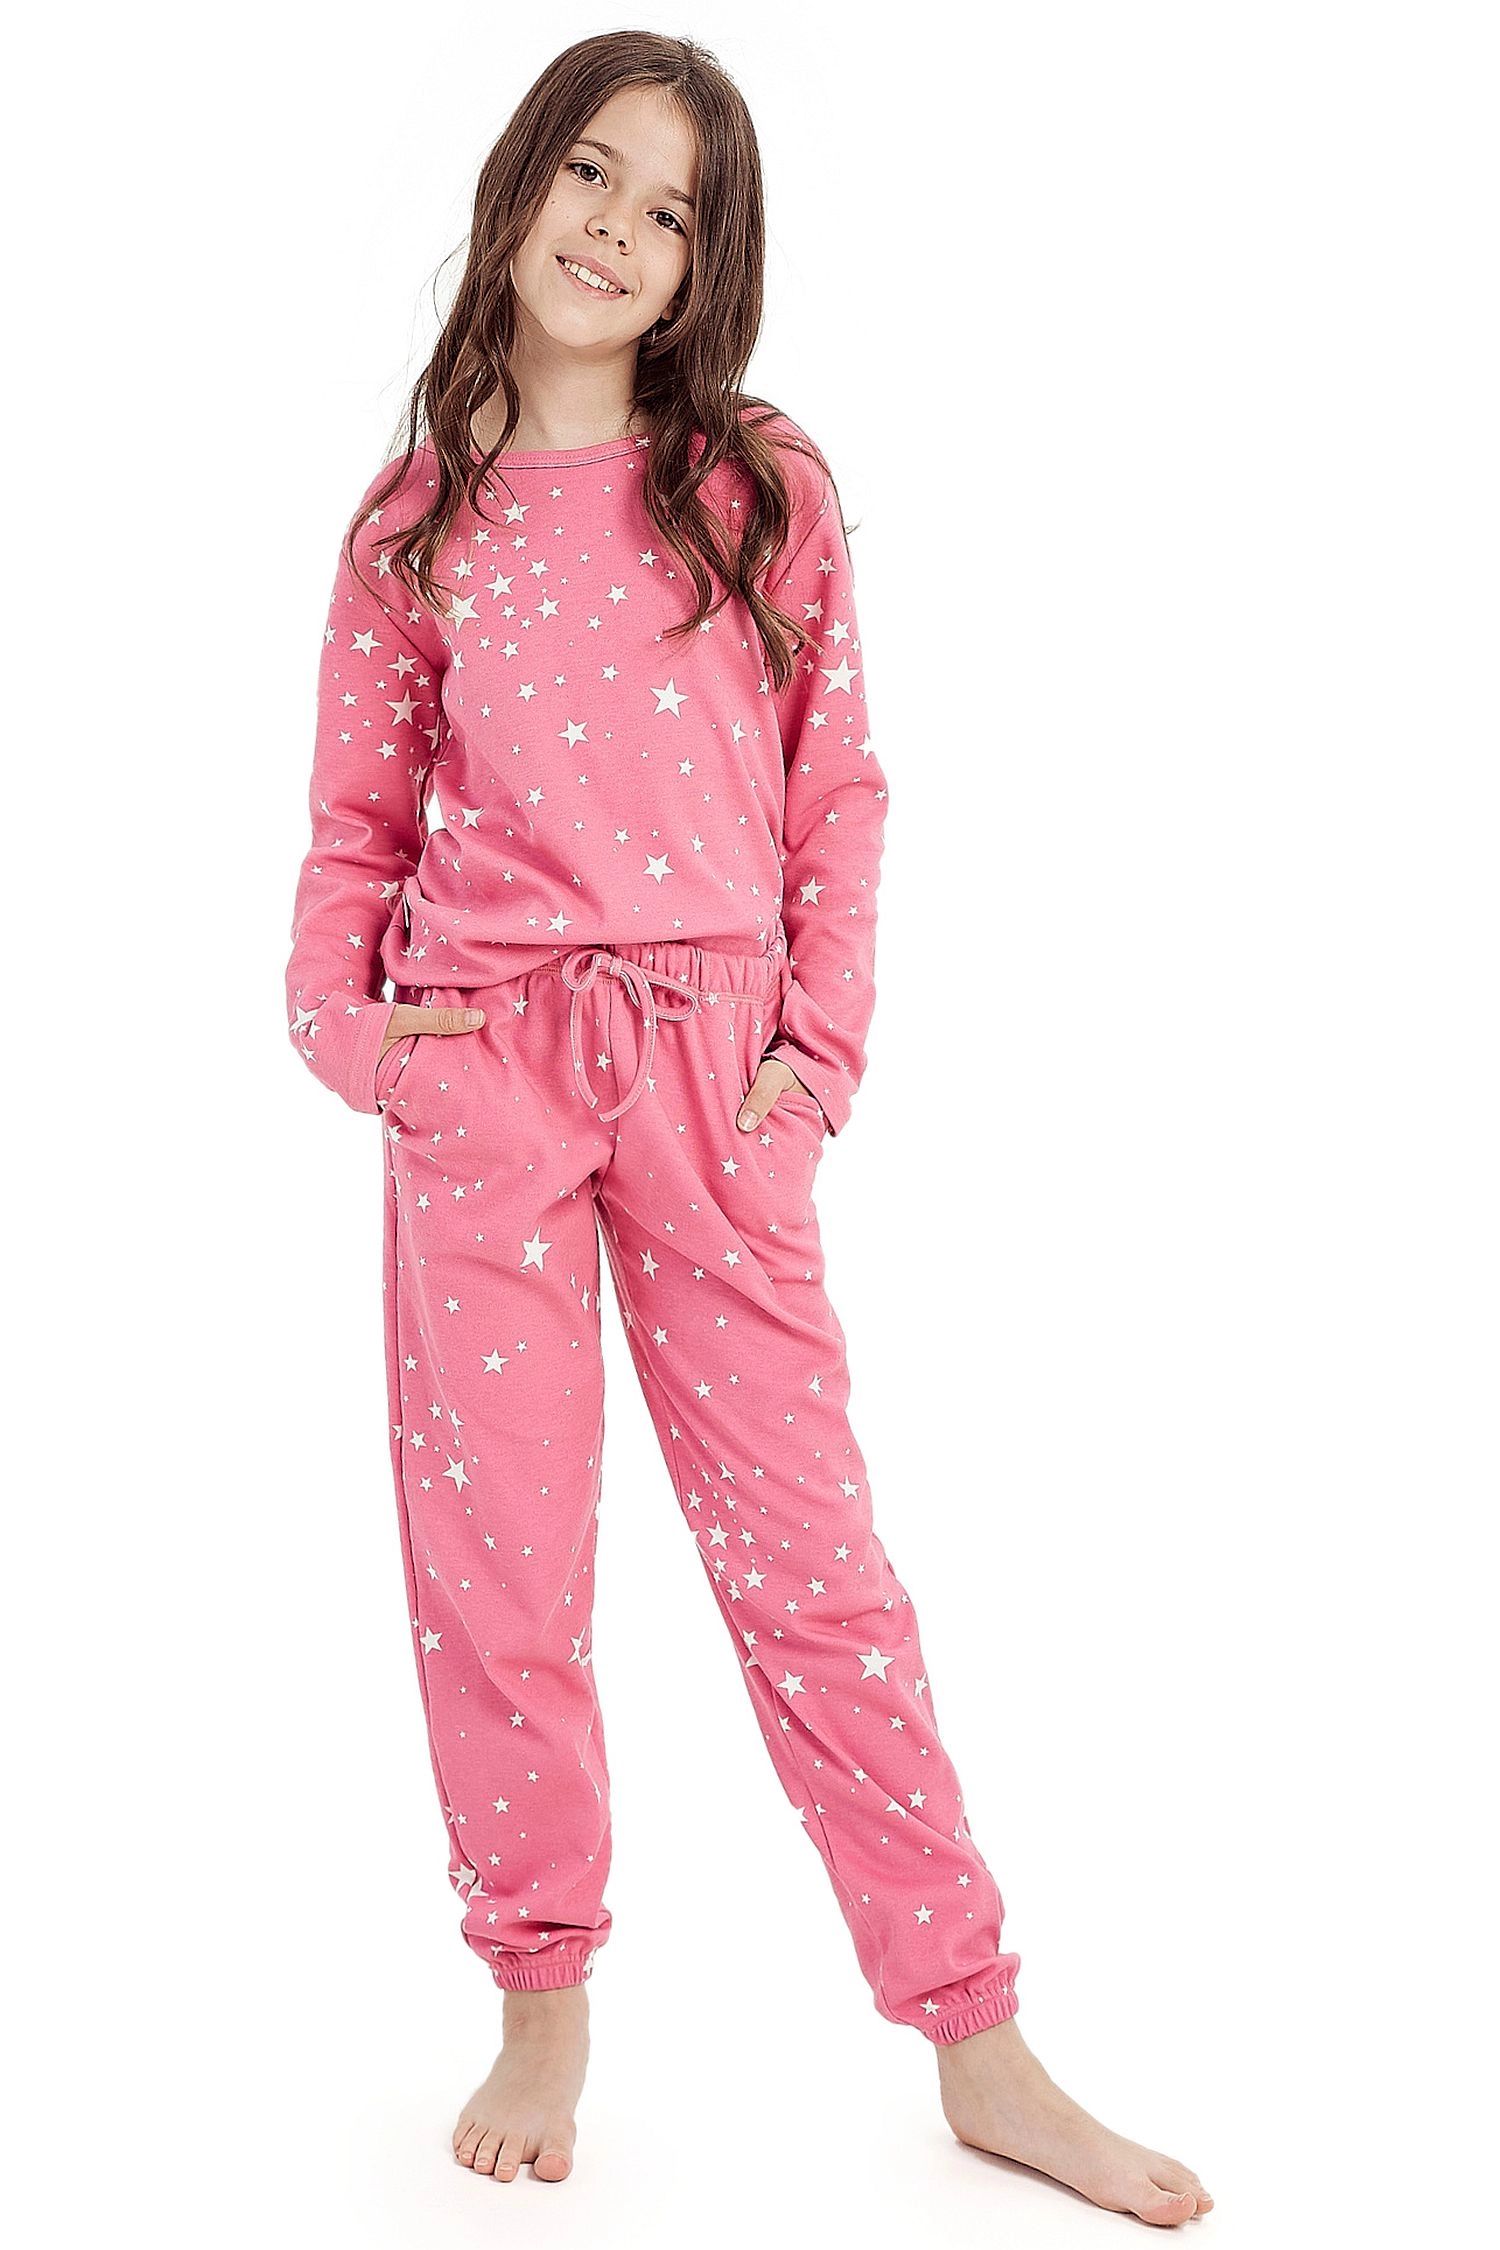 E-shop Dievčenské pyžamo 3048 Eryka